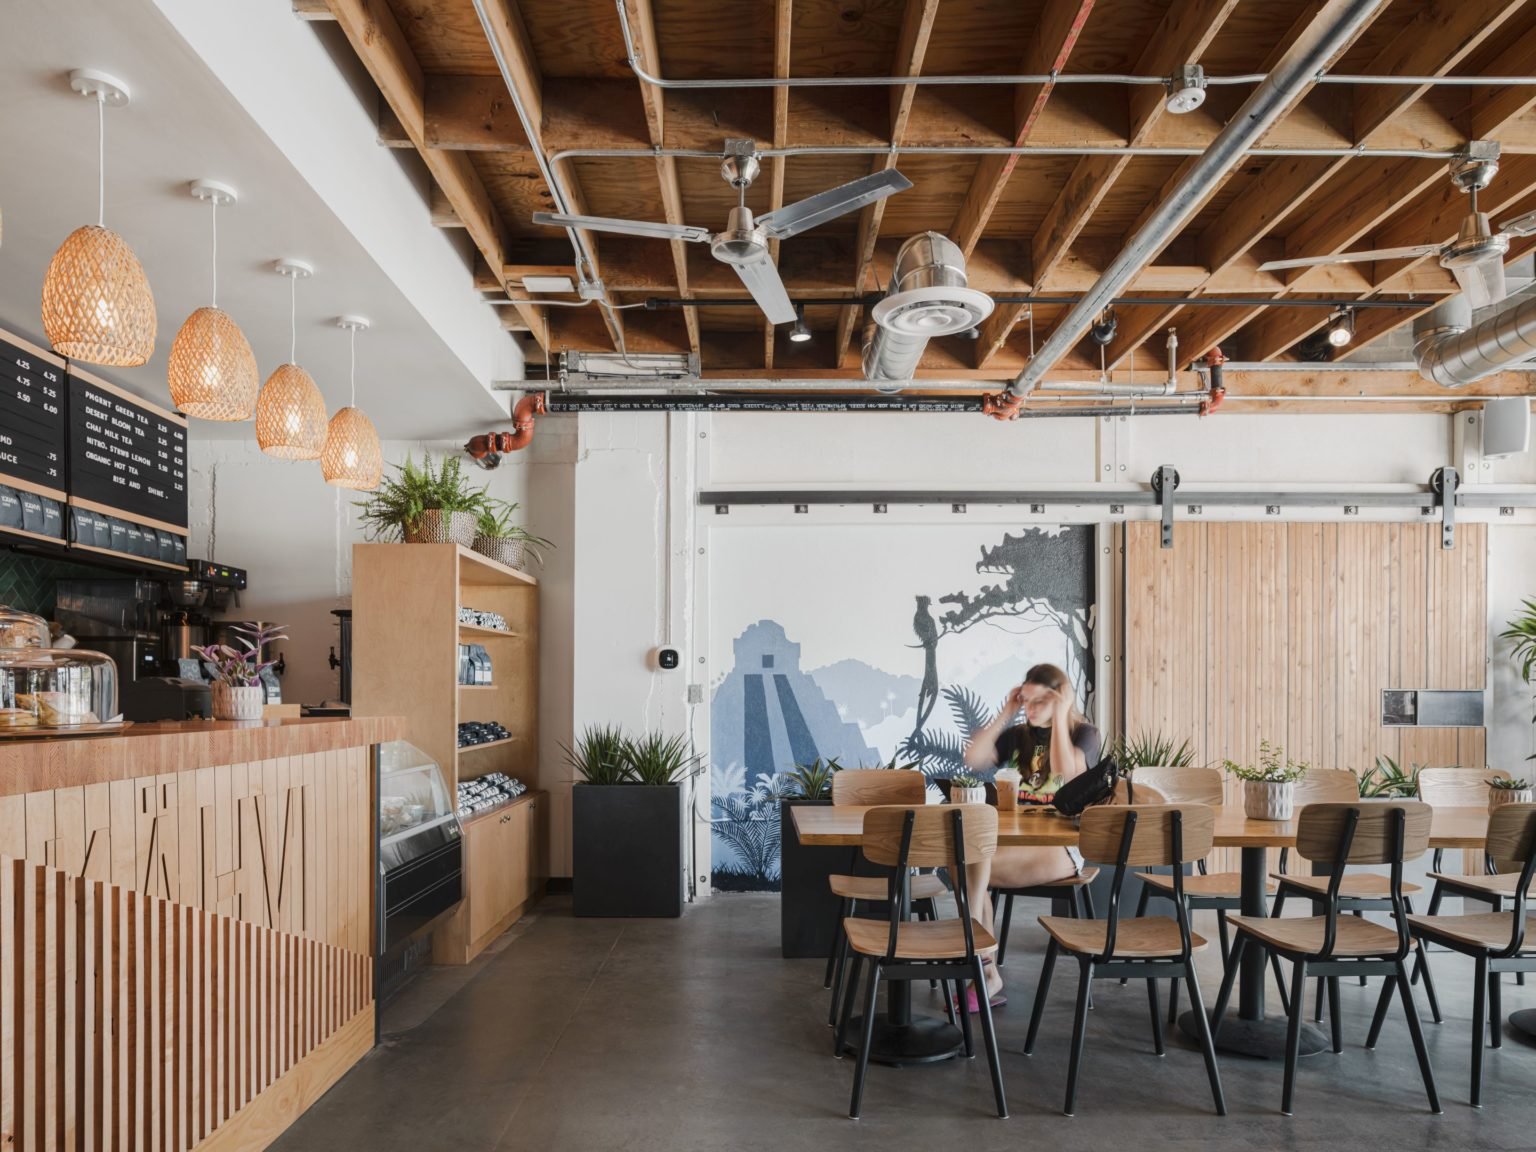 Kahvi Coffee Shop, Arizona - Coffee Shop/Delicatessen Interior Design on Love That Design